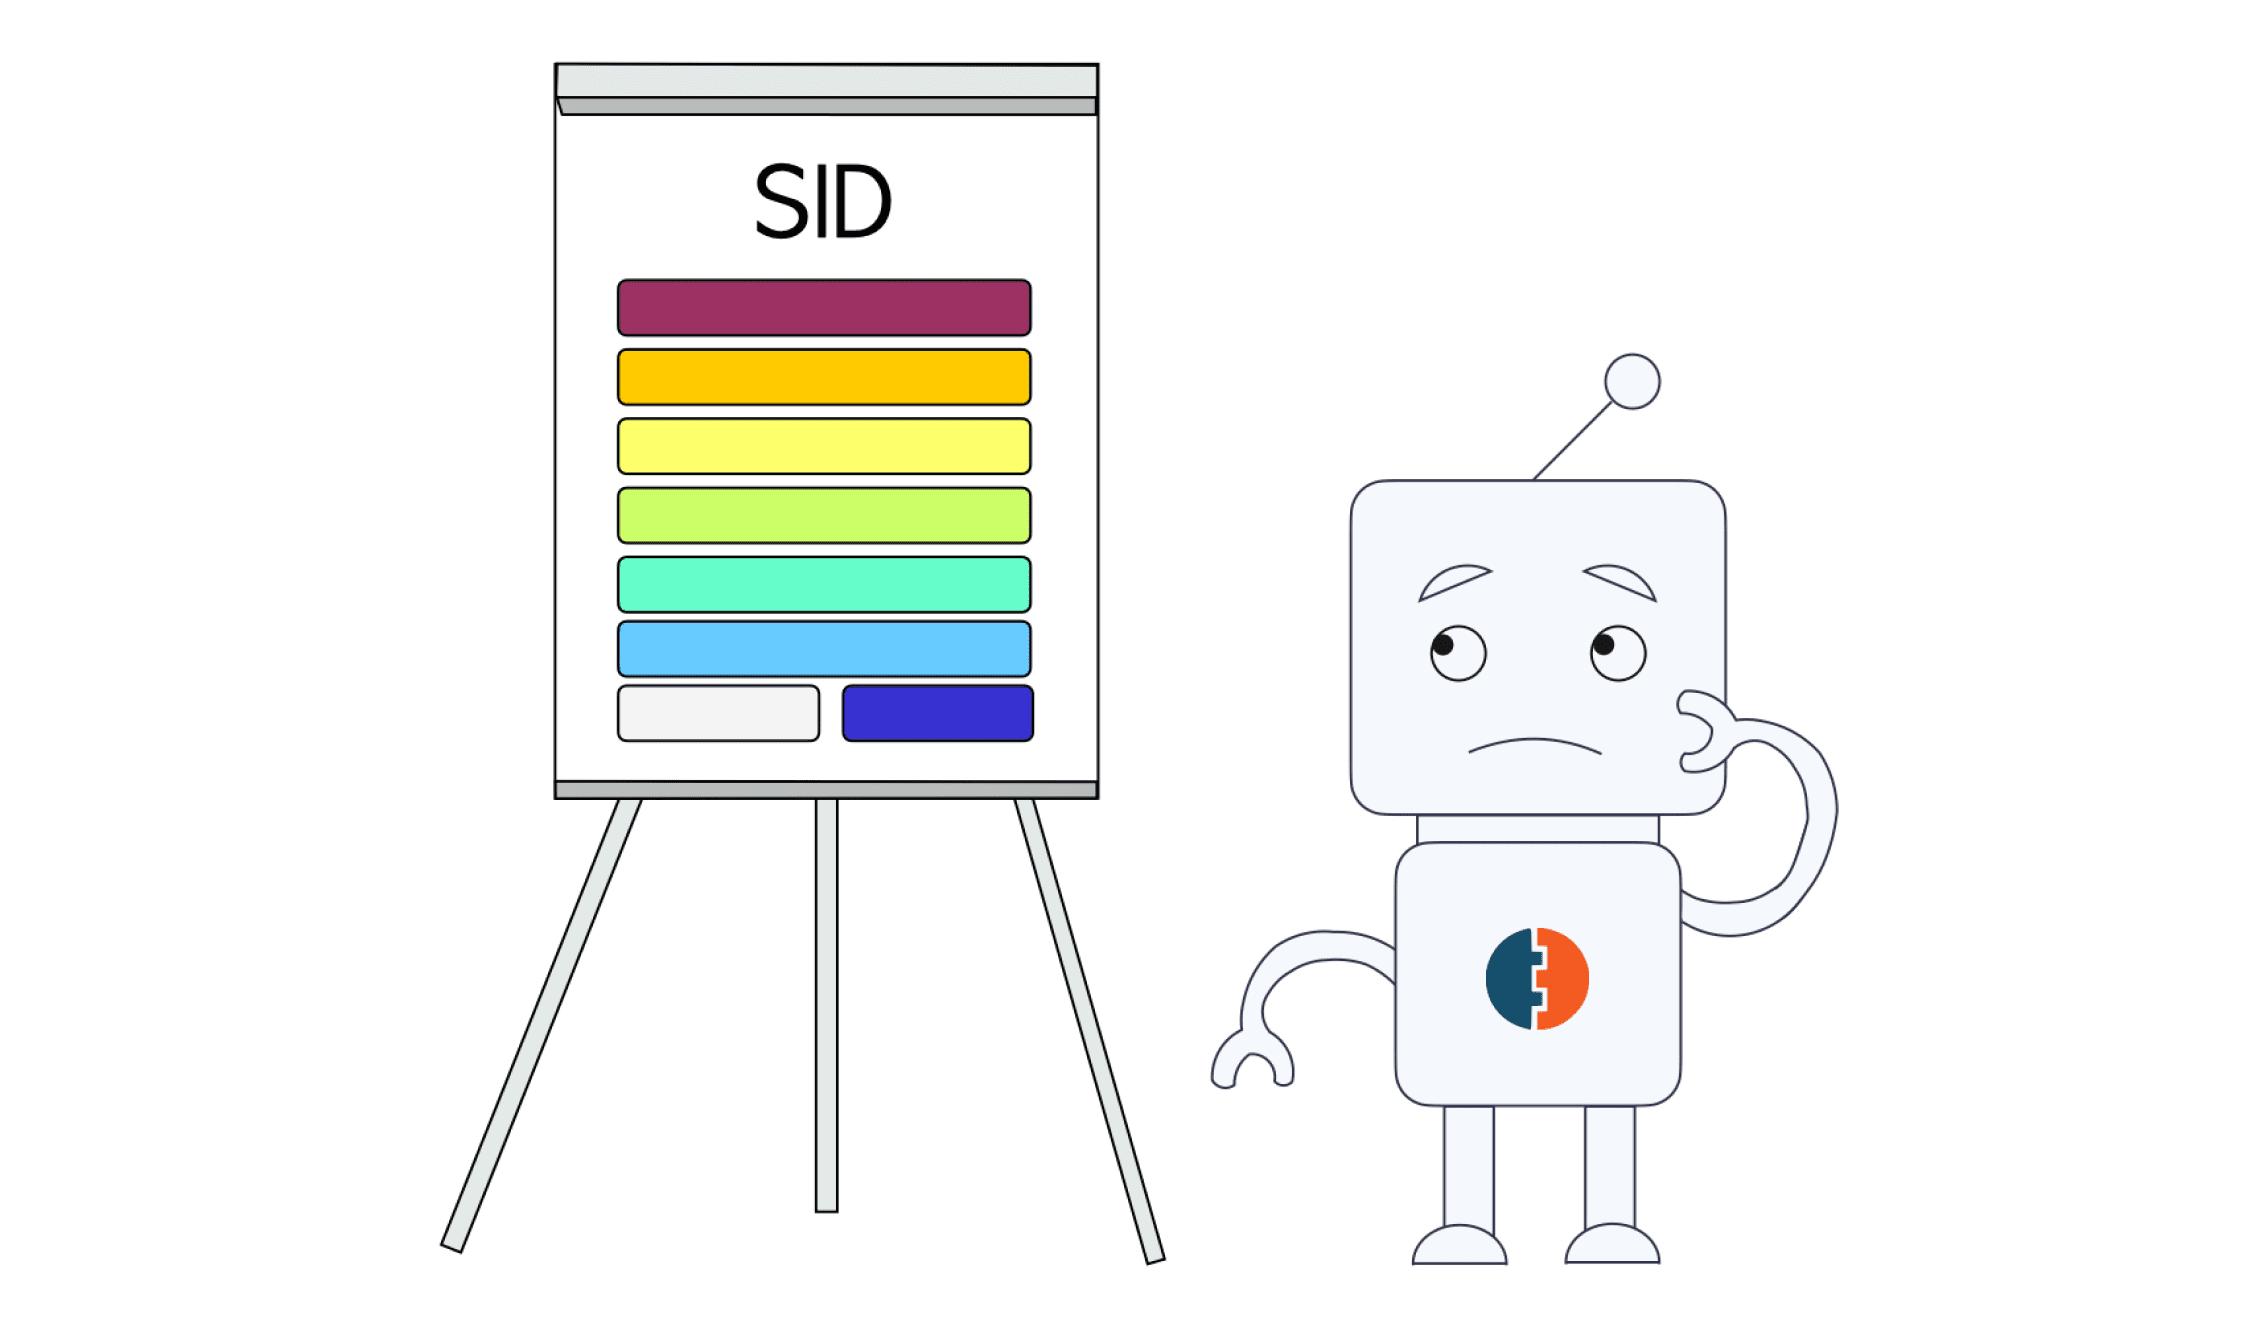 Модель SID в OSS/BSS-решениях